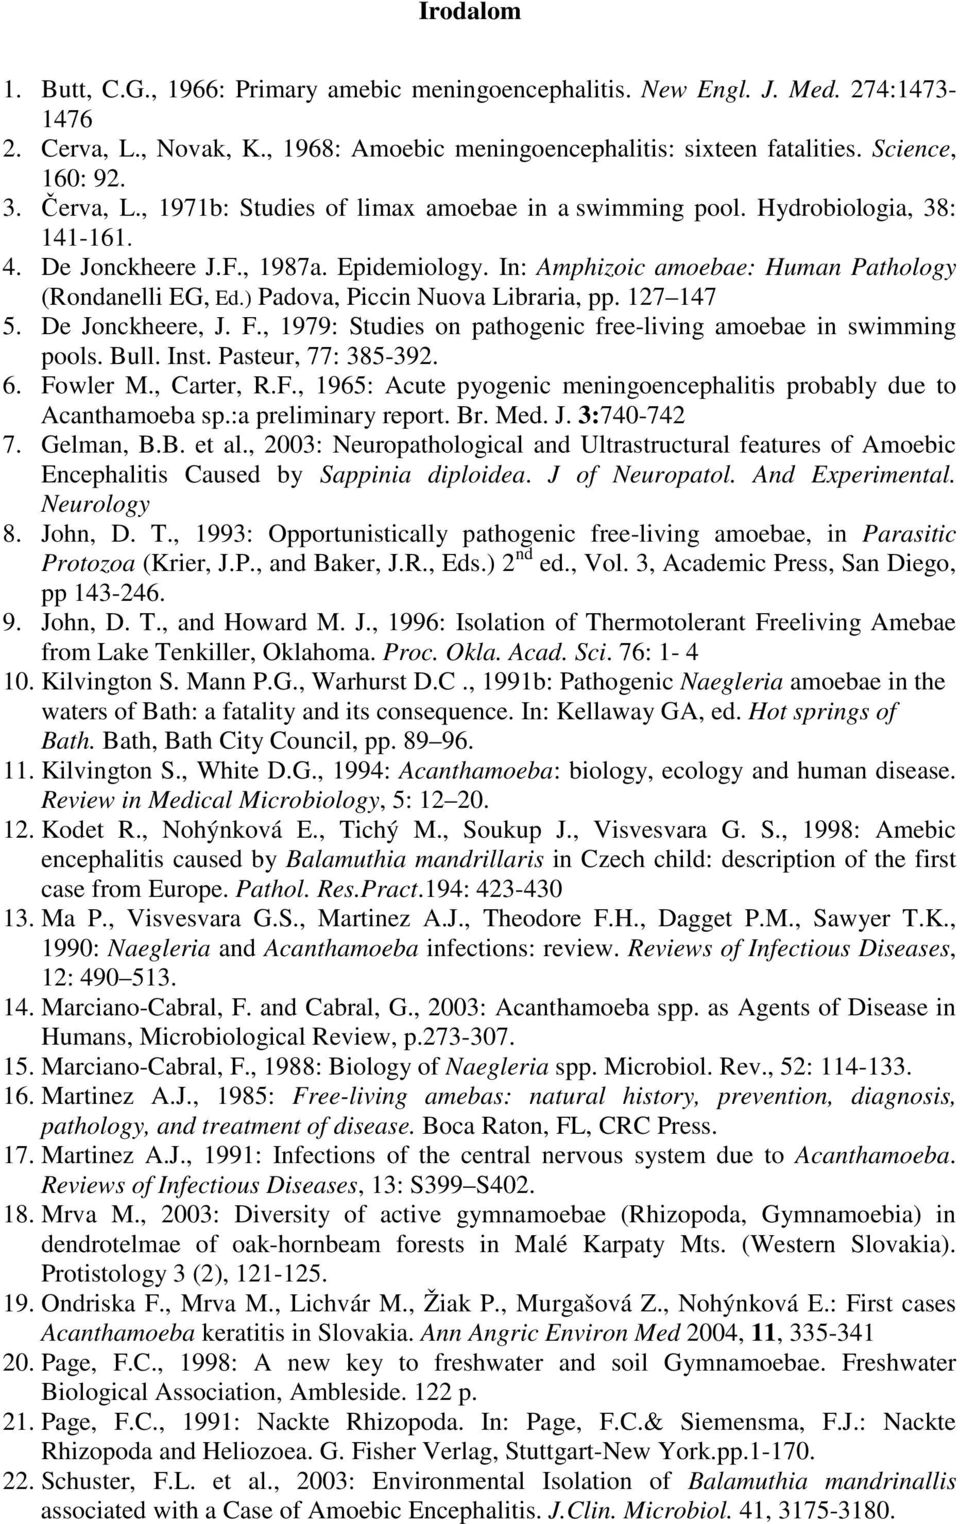 ) Padova, Piccin Nuova Libraria, pp. 127 147 5. De Jonckheere, J. F., 1979: Studies on pathogenic free-living amoebae in swimming pools. Bull. Inst. Pasteur, 77: 385-392. 6. Fowler M., Carter, R.F., 1965: Acute pyogenic meningoencephalitis probably due to Acanthamoeba sp.